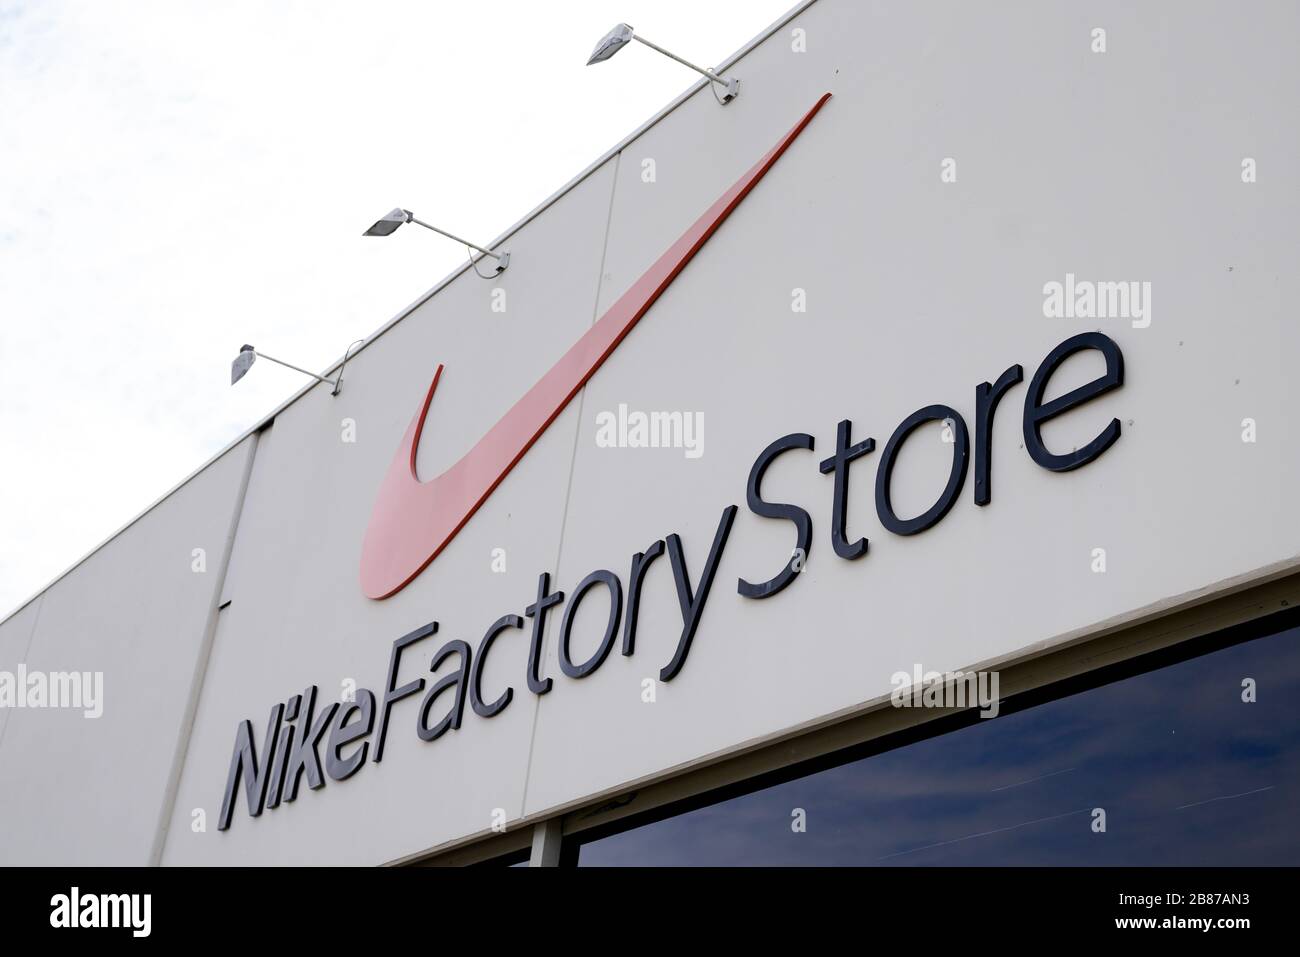 Bordeaux , Aquitaine / France - 09 24 2019 : Nike Factory Store shop front sign Stock Photo